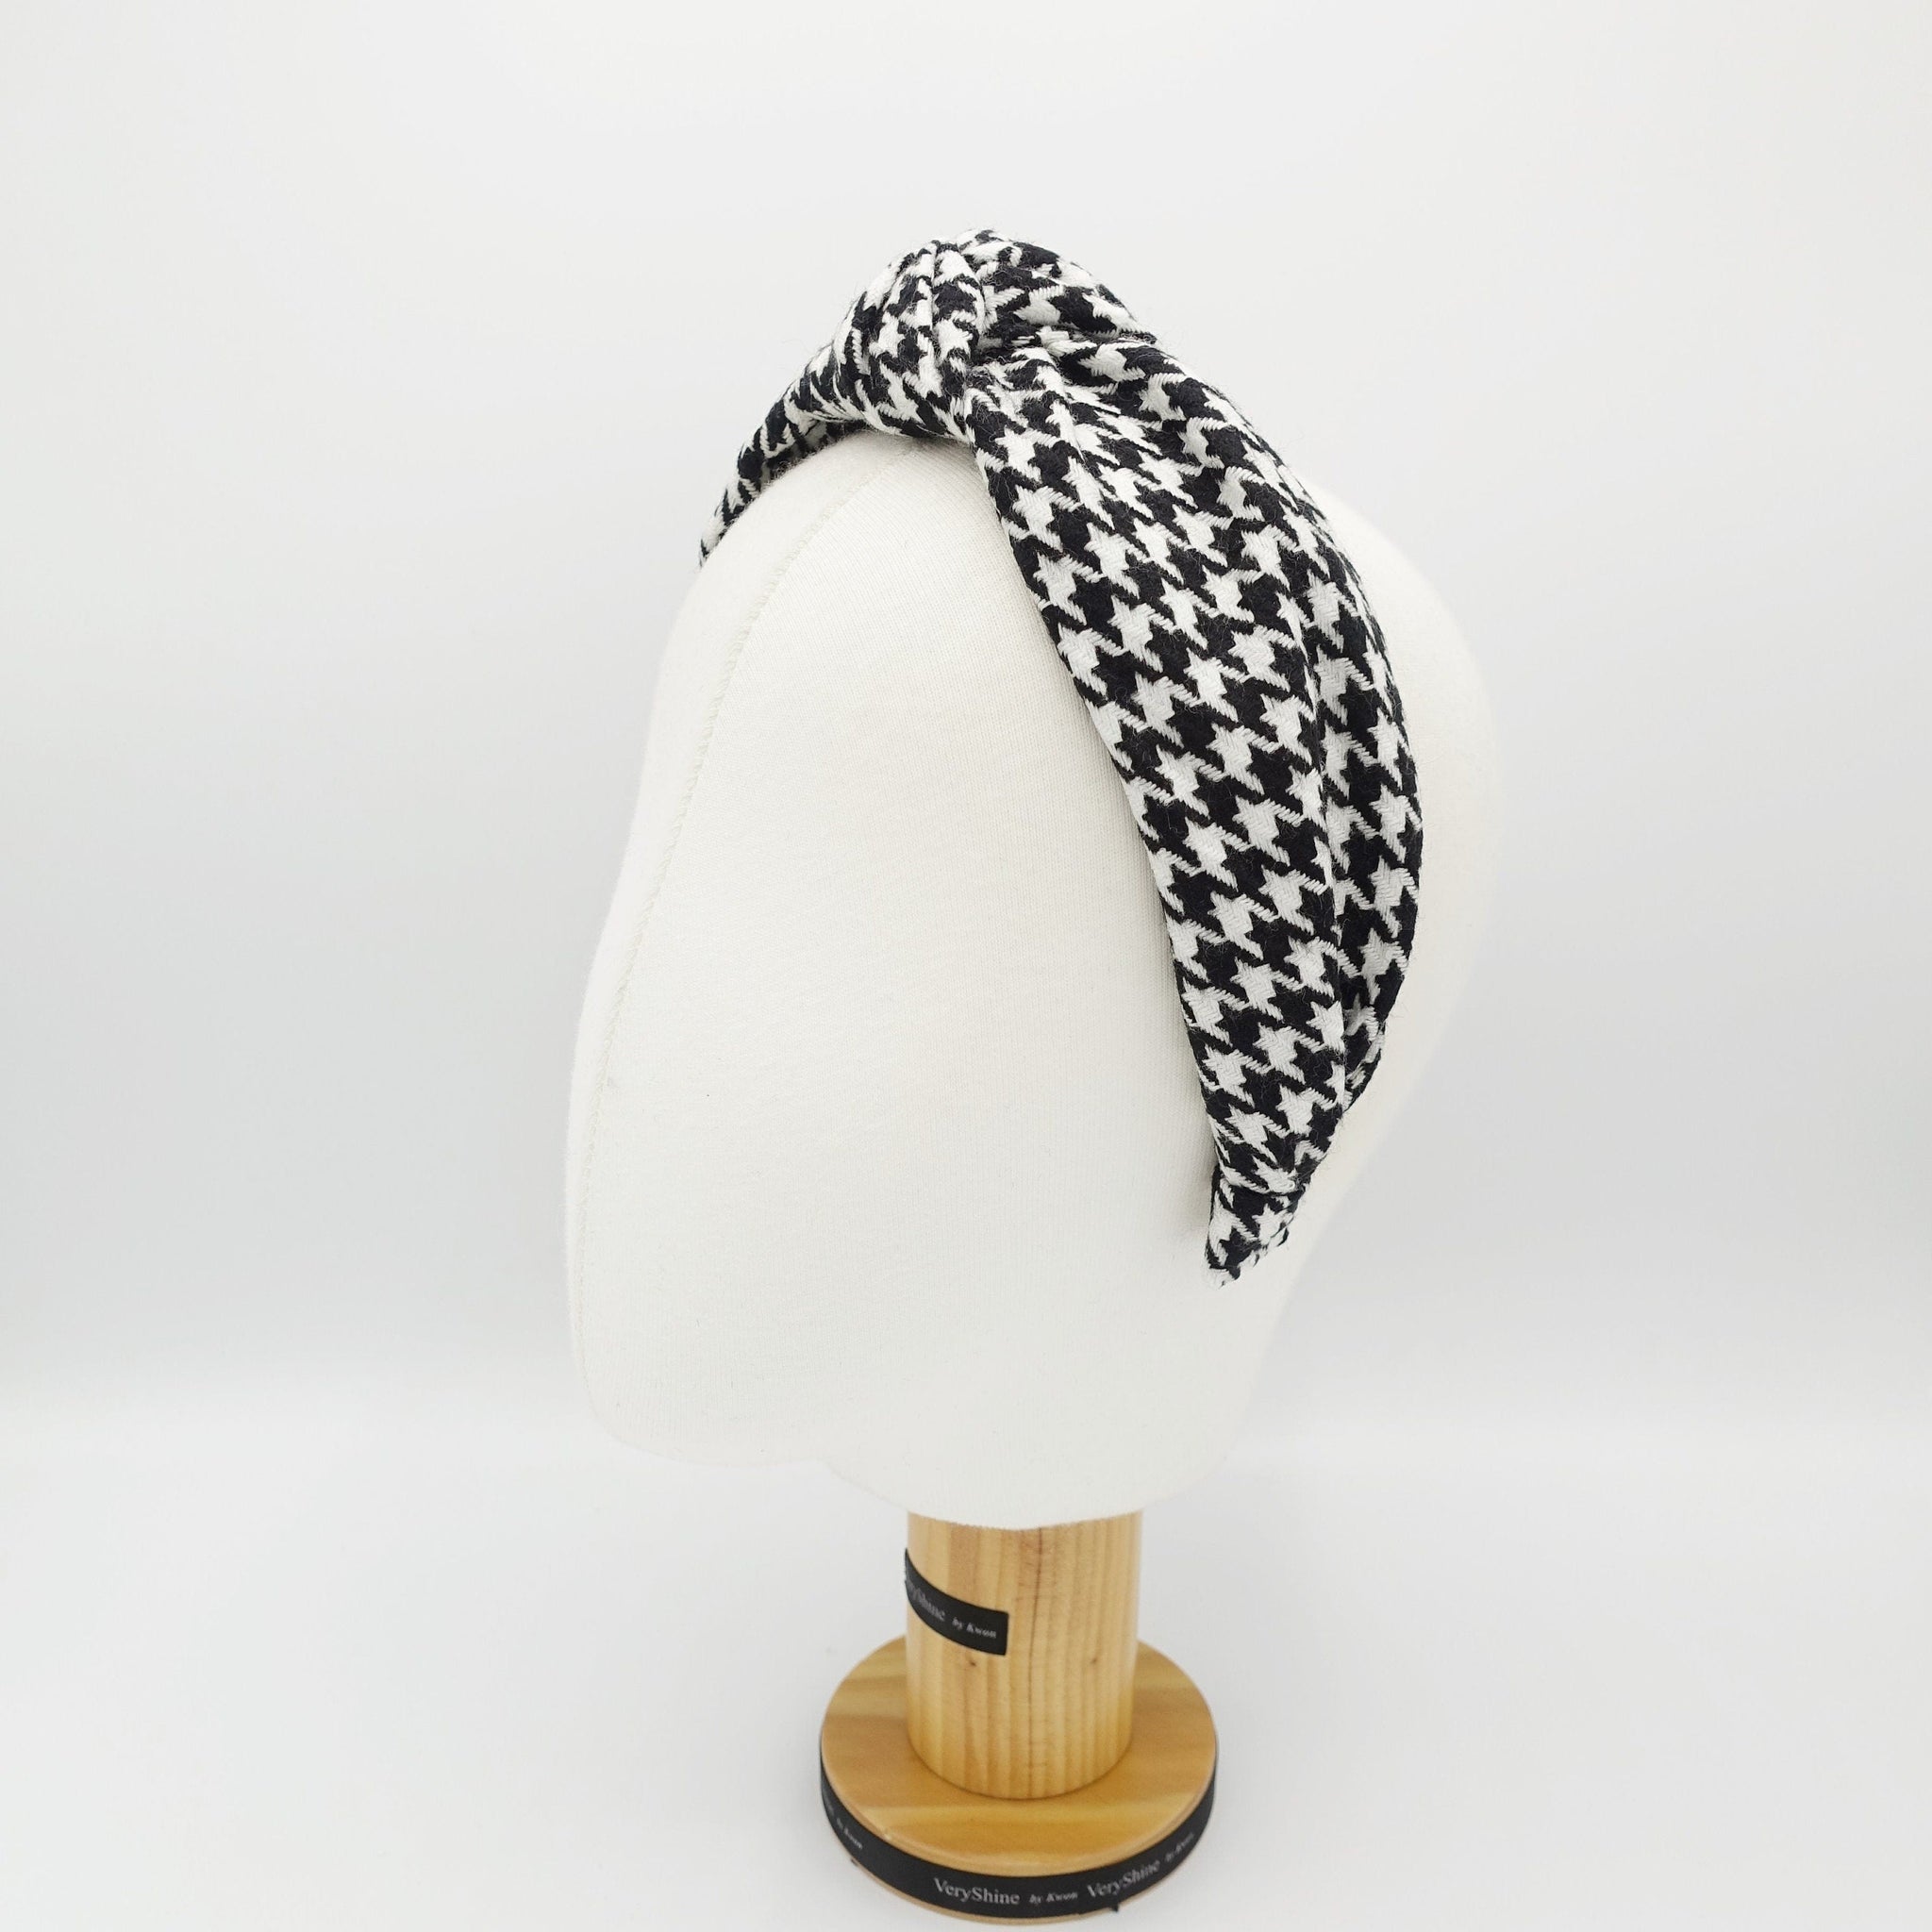 veryshine.com Headband knotted headband houndstooth hairband large pattern headband women hair accessory